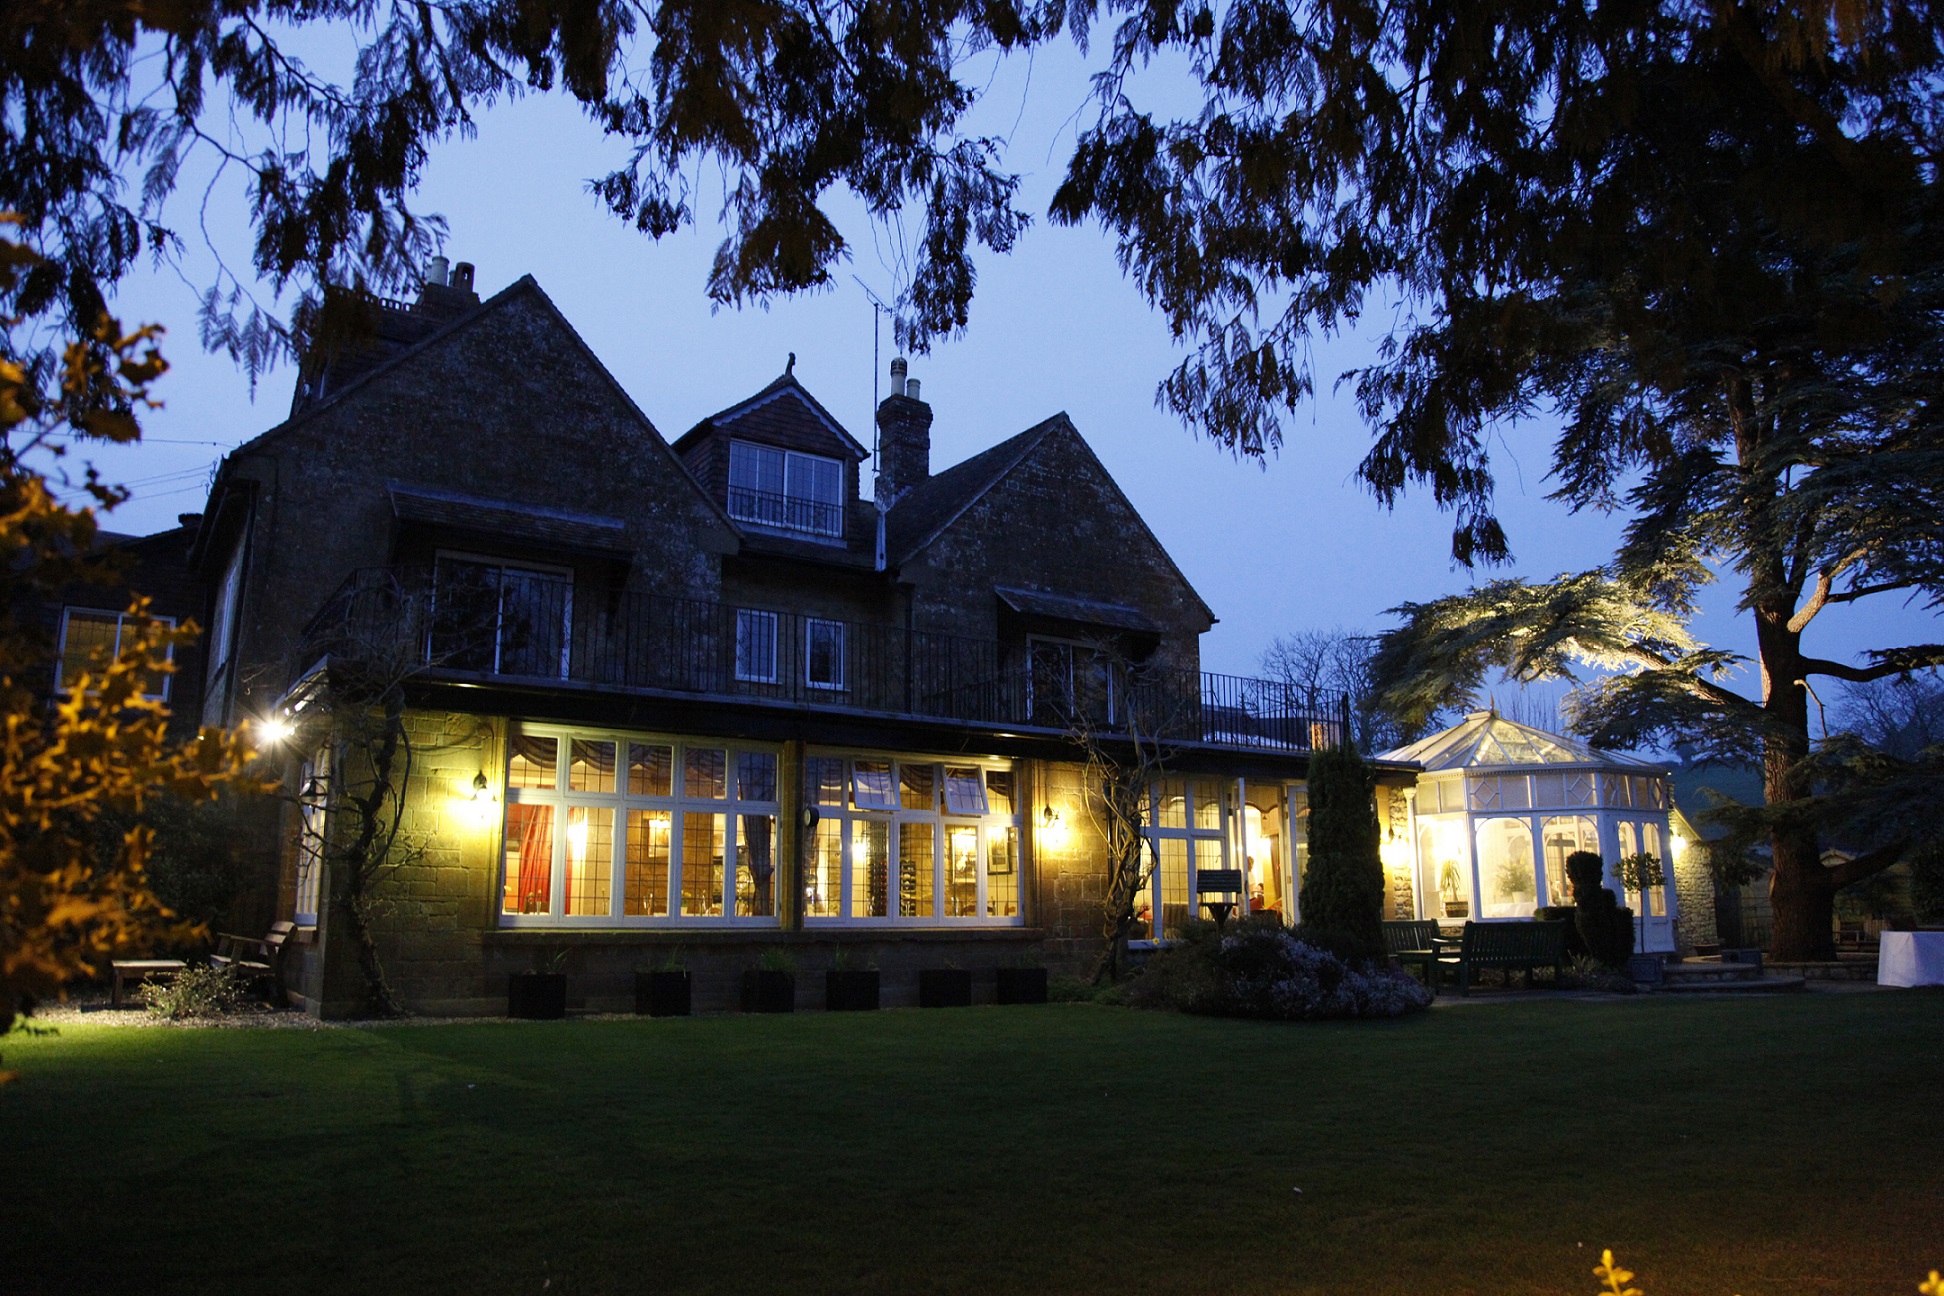 The Grange at Oborne at night